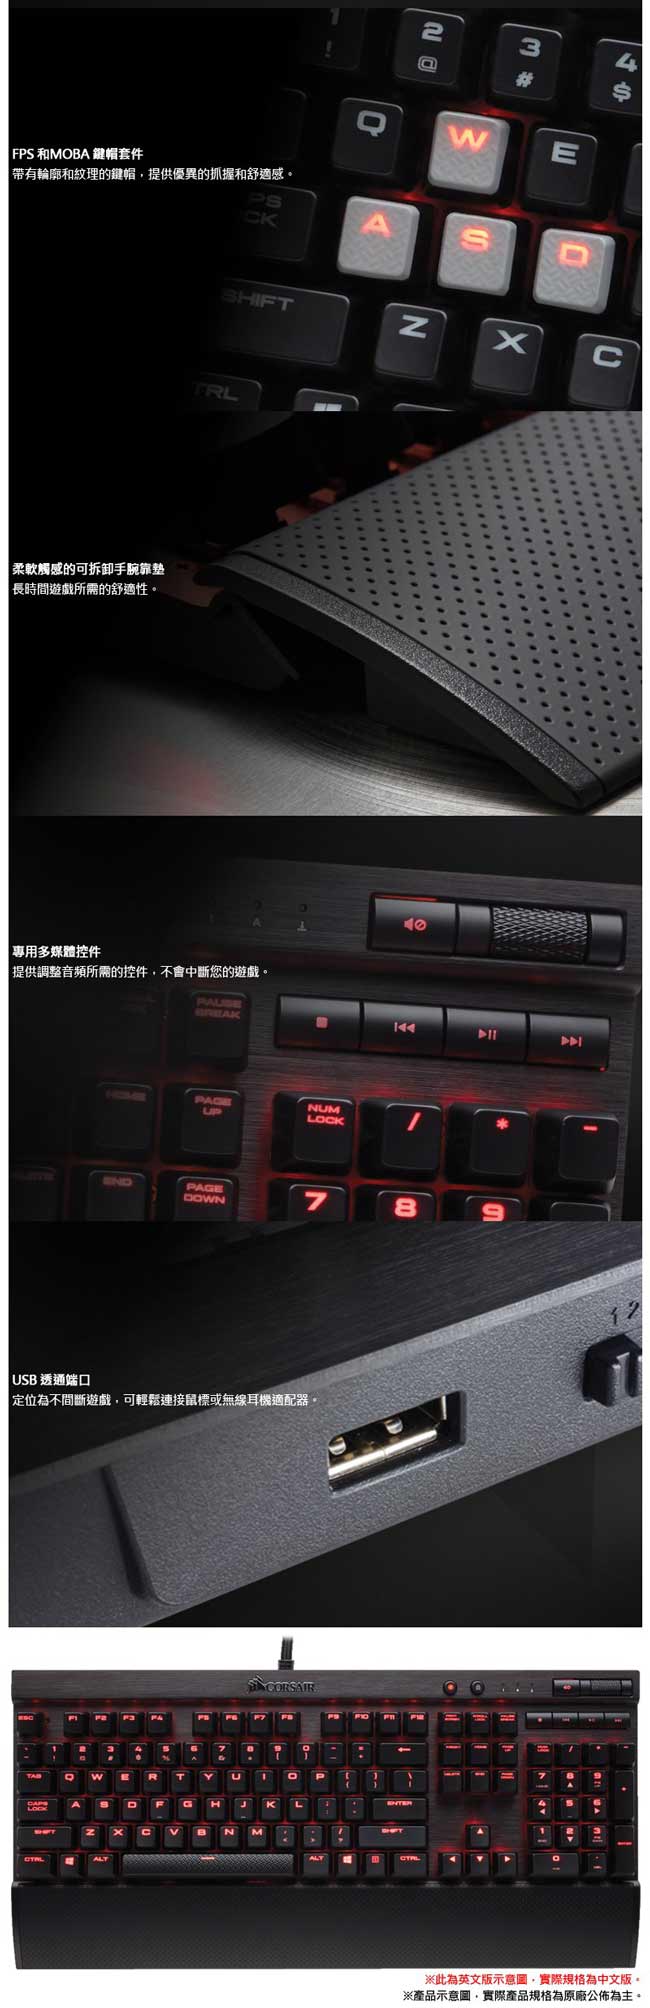 Corsair 海盜船 復仇者 K70 LUX 青軸 紅光 機械鍵盤《中文版》